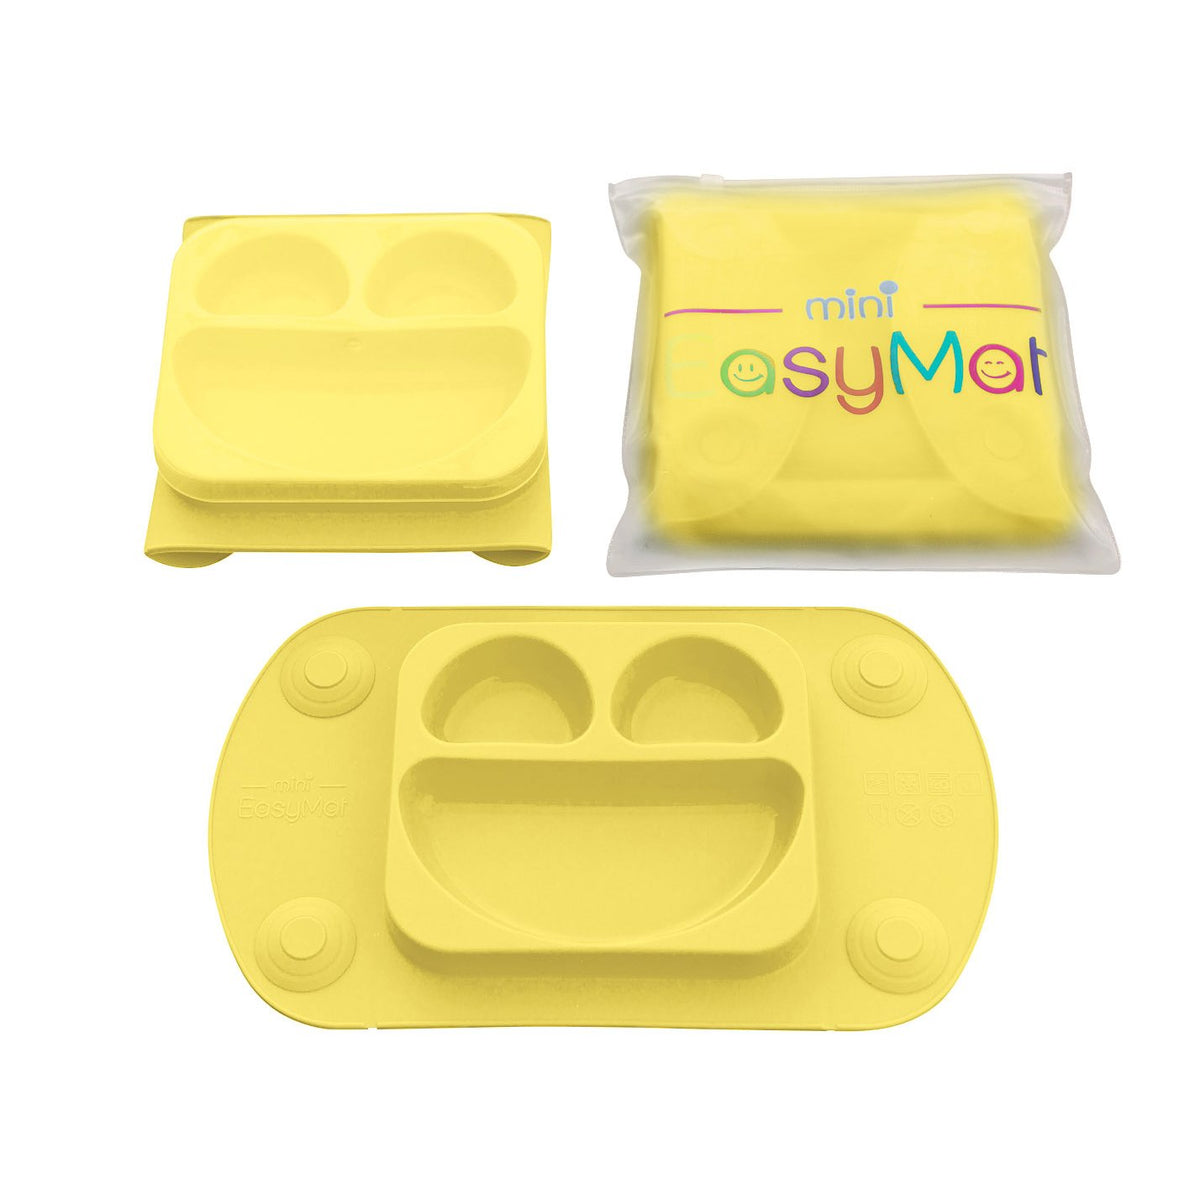 easymat-mini-portable-suction-plate-buttercup- (1)